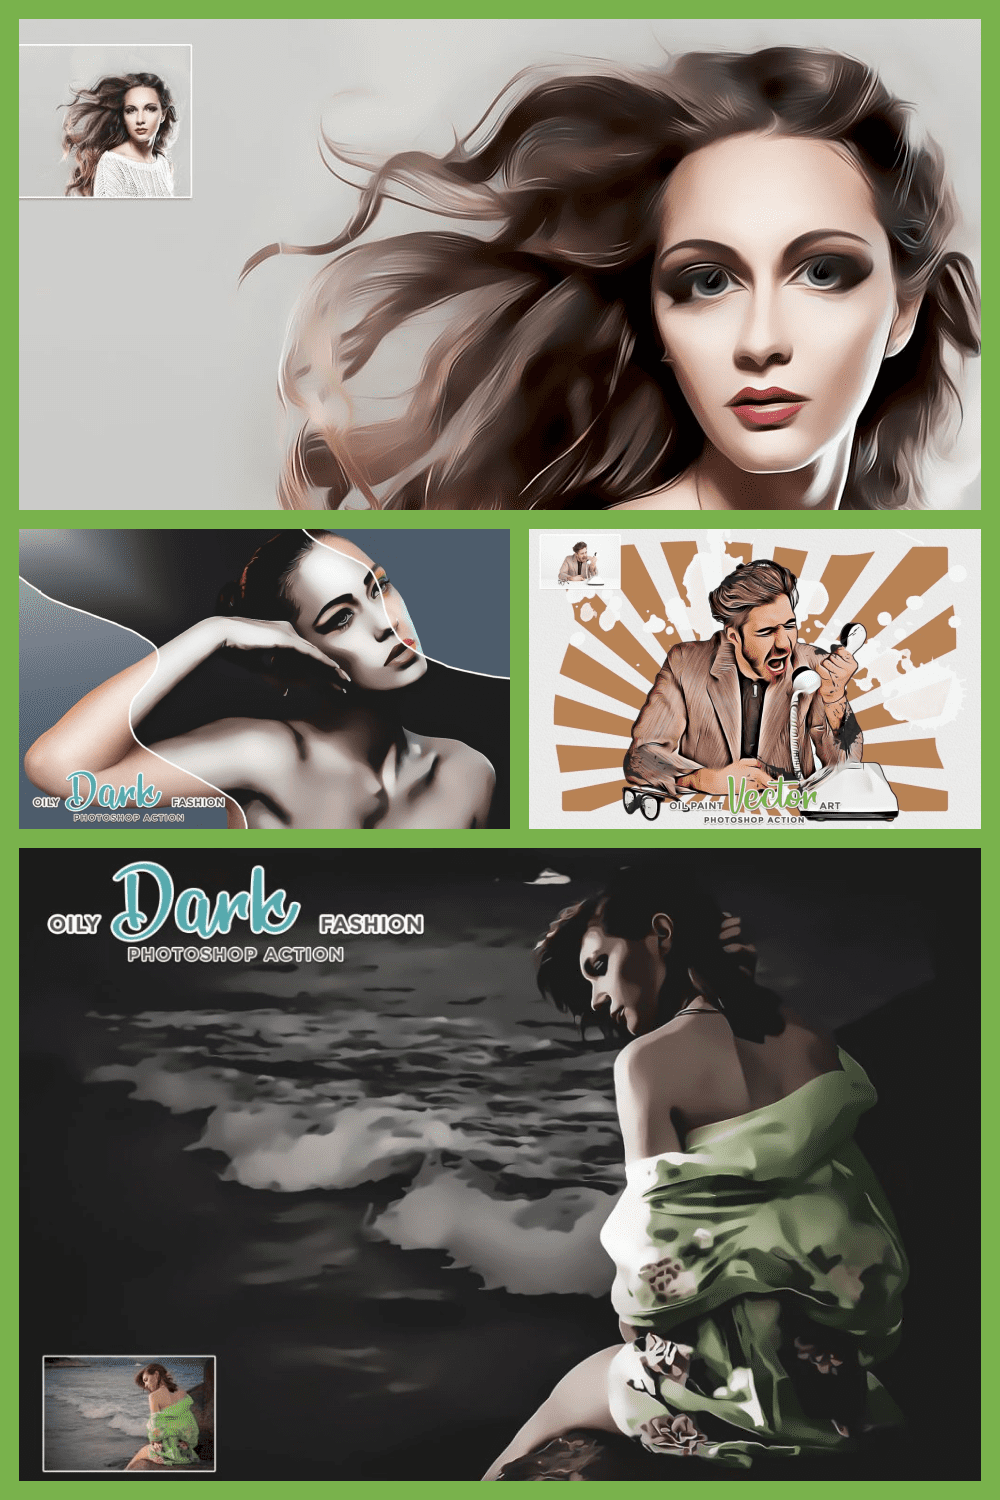 Modern Art Painting – 19 in 1 Photoshop Action Bundle - MasterBundles - Pinterest Collage Image.